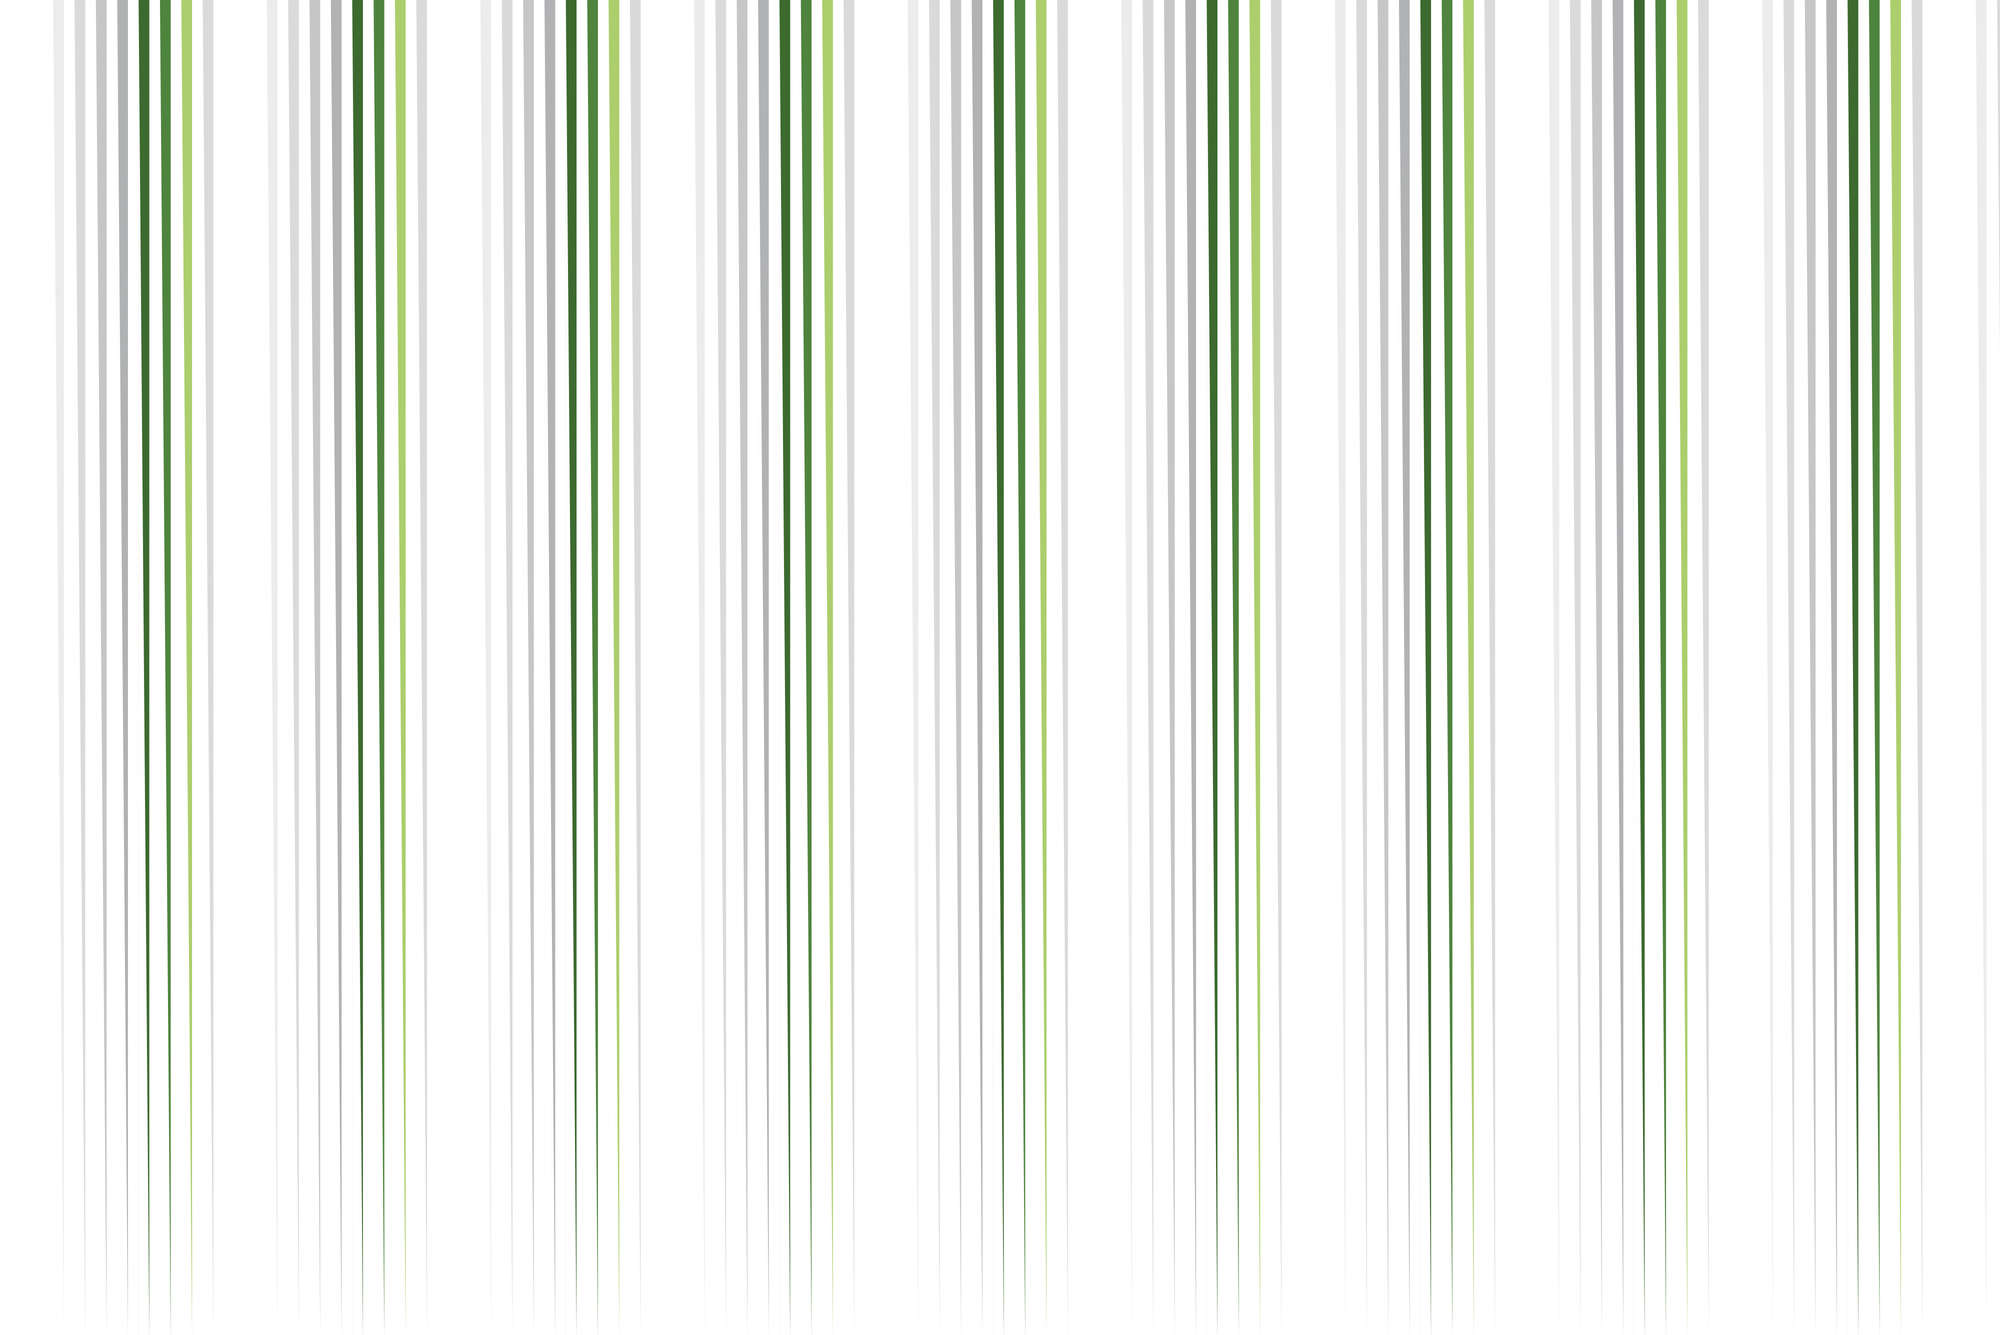             Carta da parati design a strisce sottili bianco verde su tessuto non tessuto liscio opaco
        